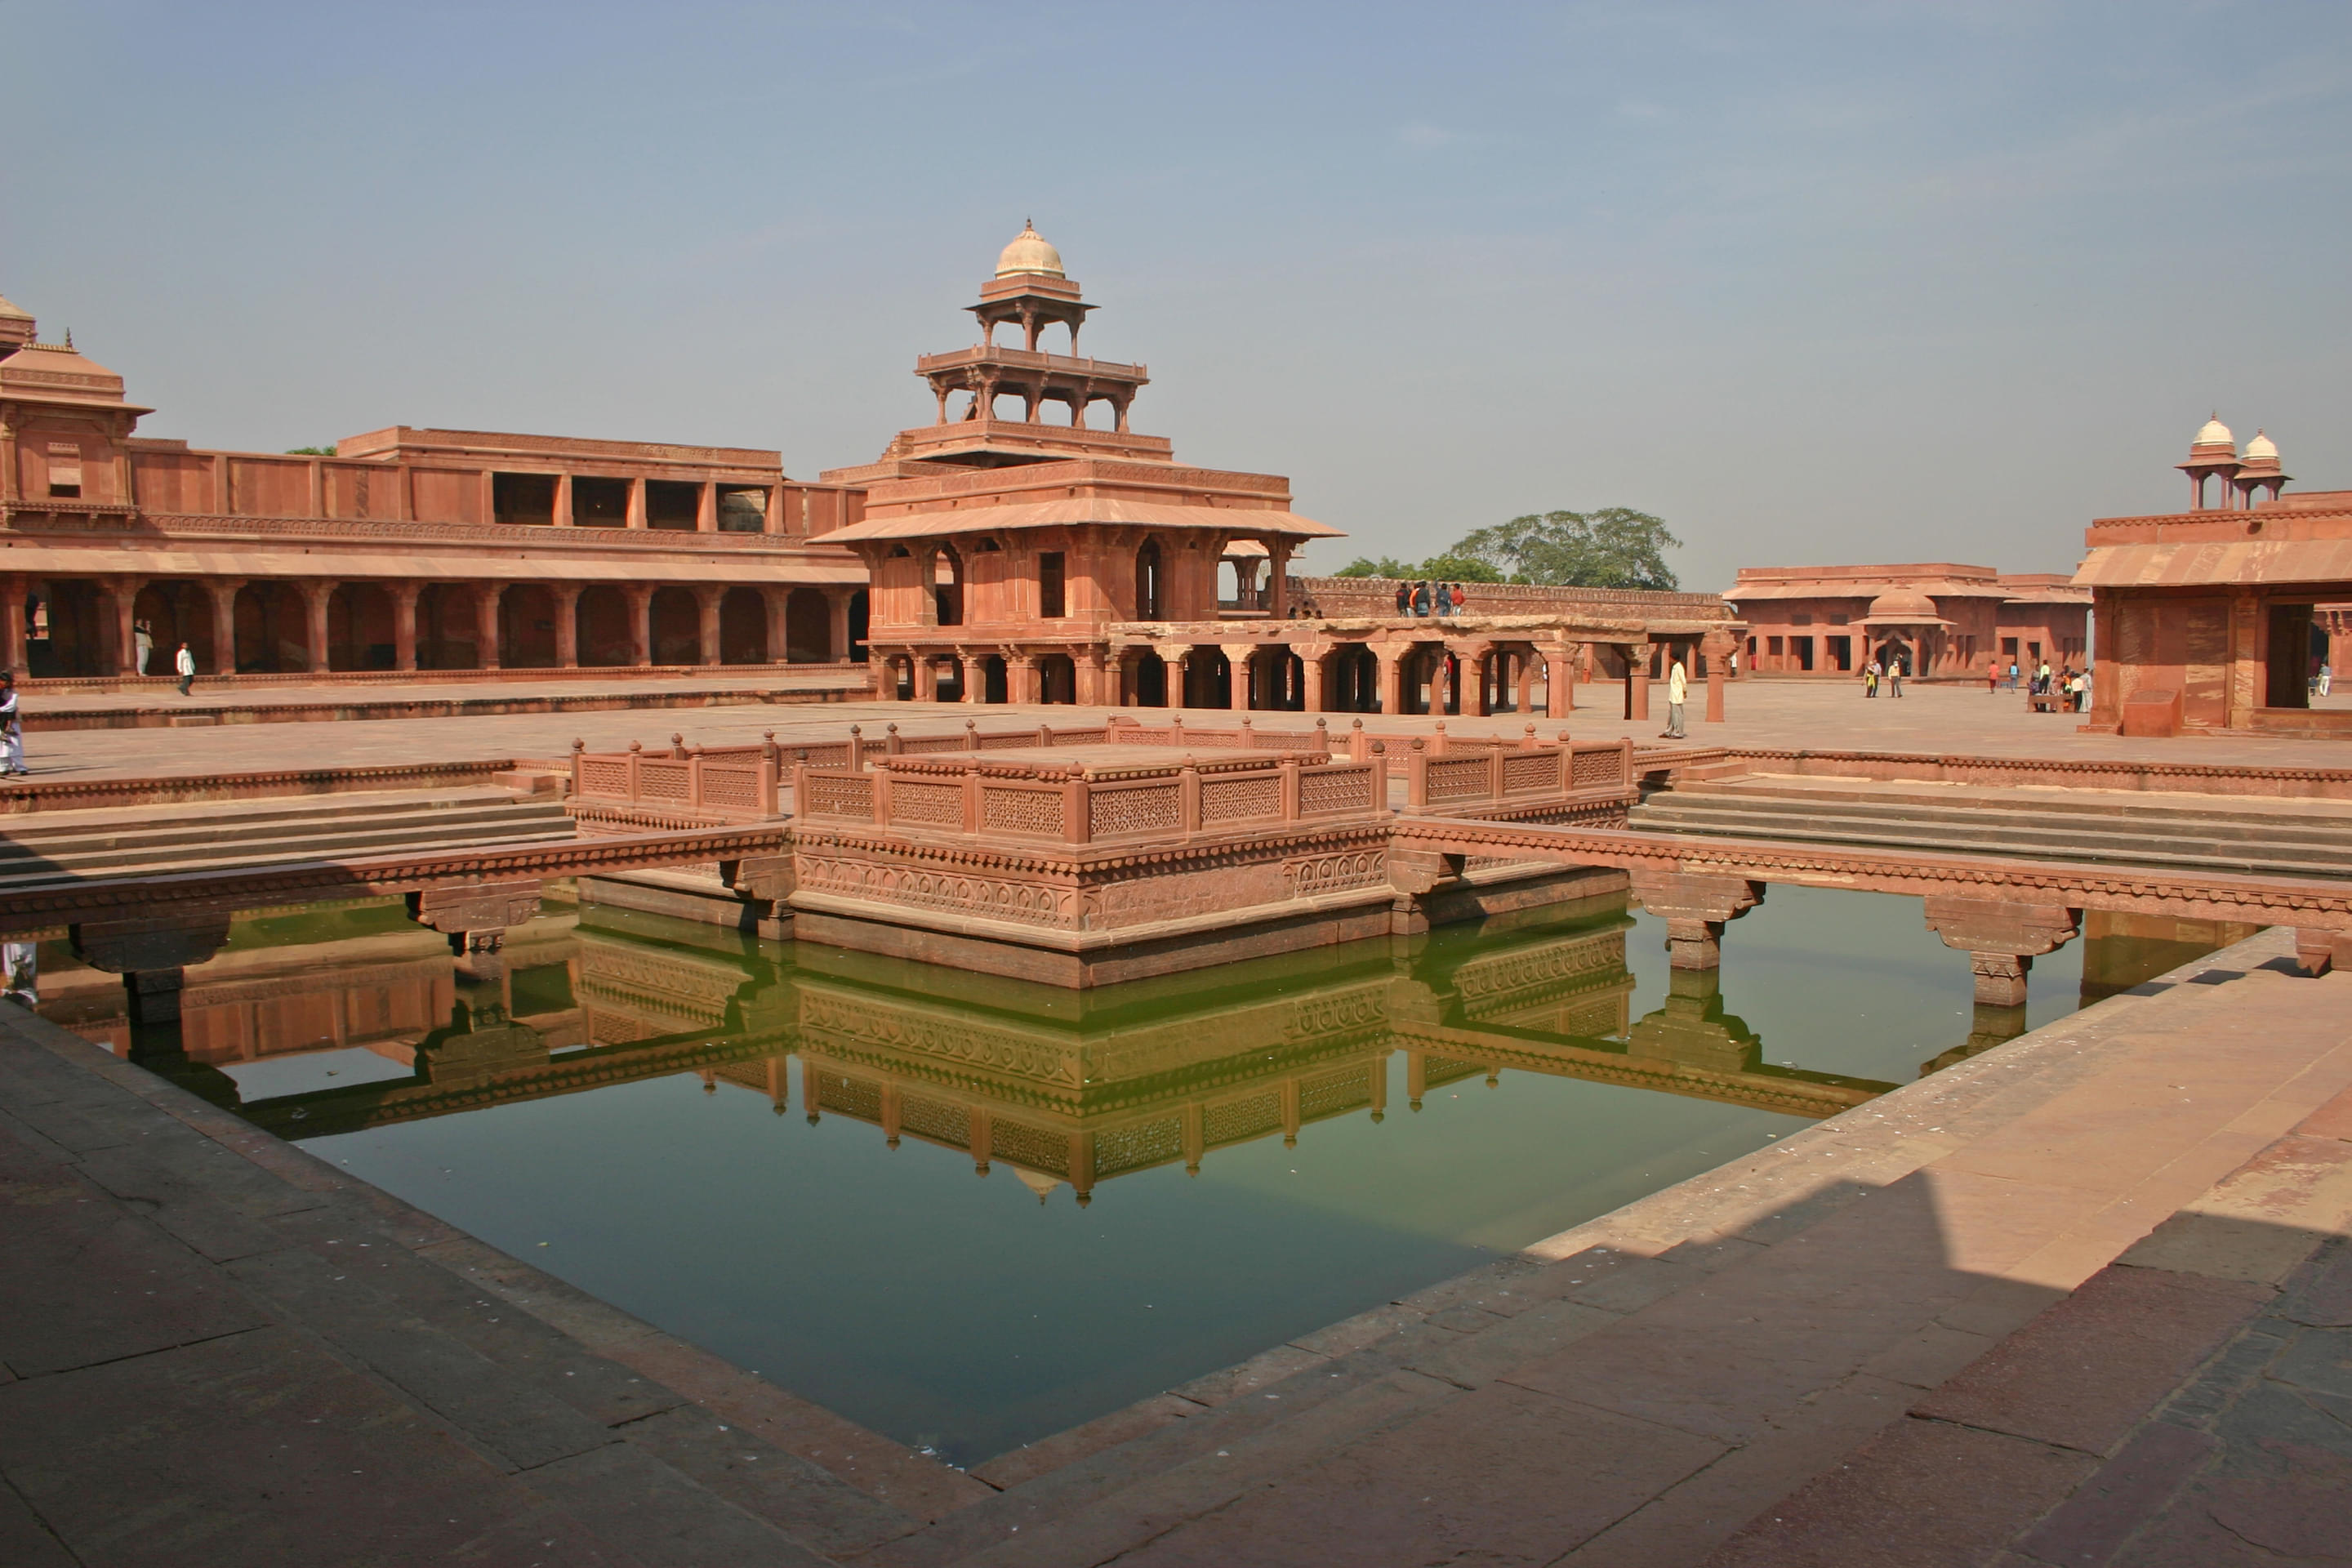 Fatehpur Sikri Overview